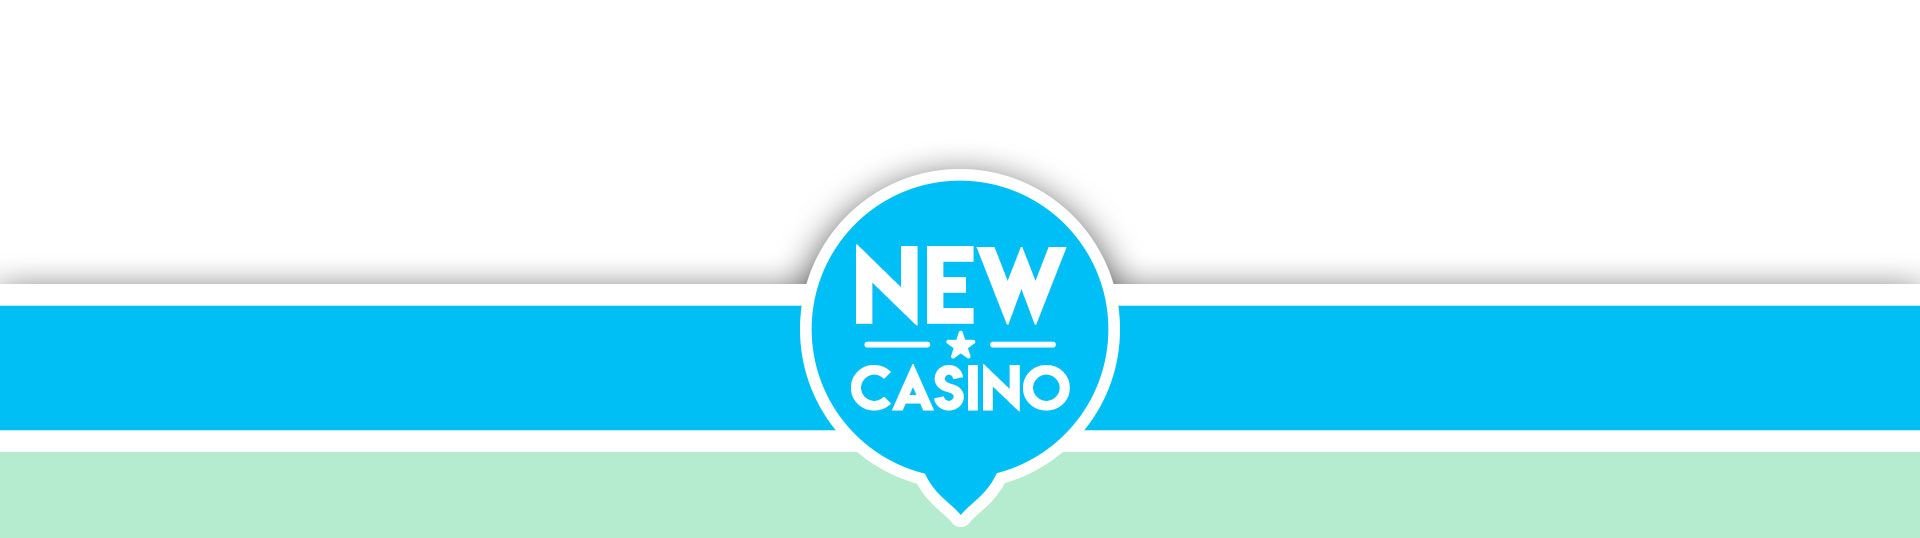 New Casinos Latest New Casino Bonus Toplist Guide - 